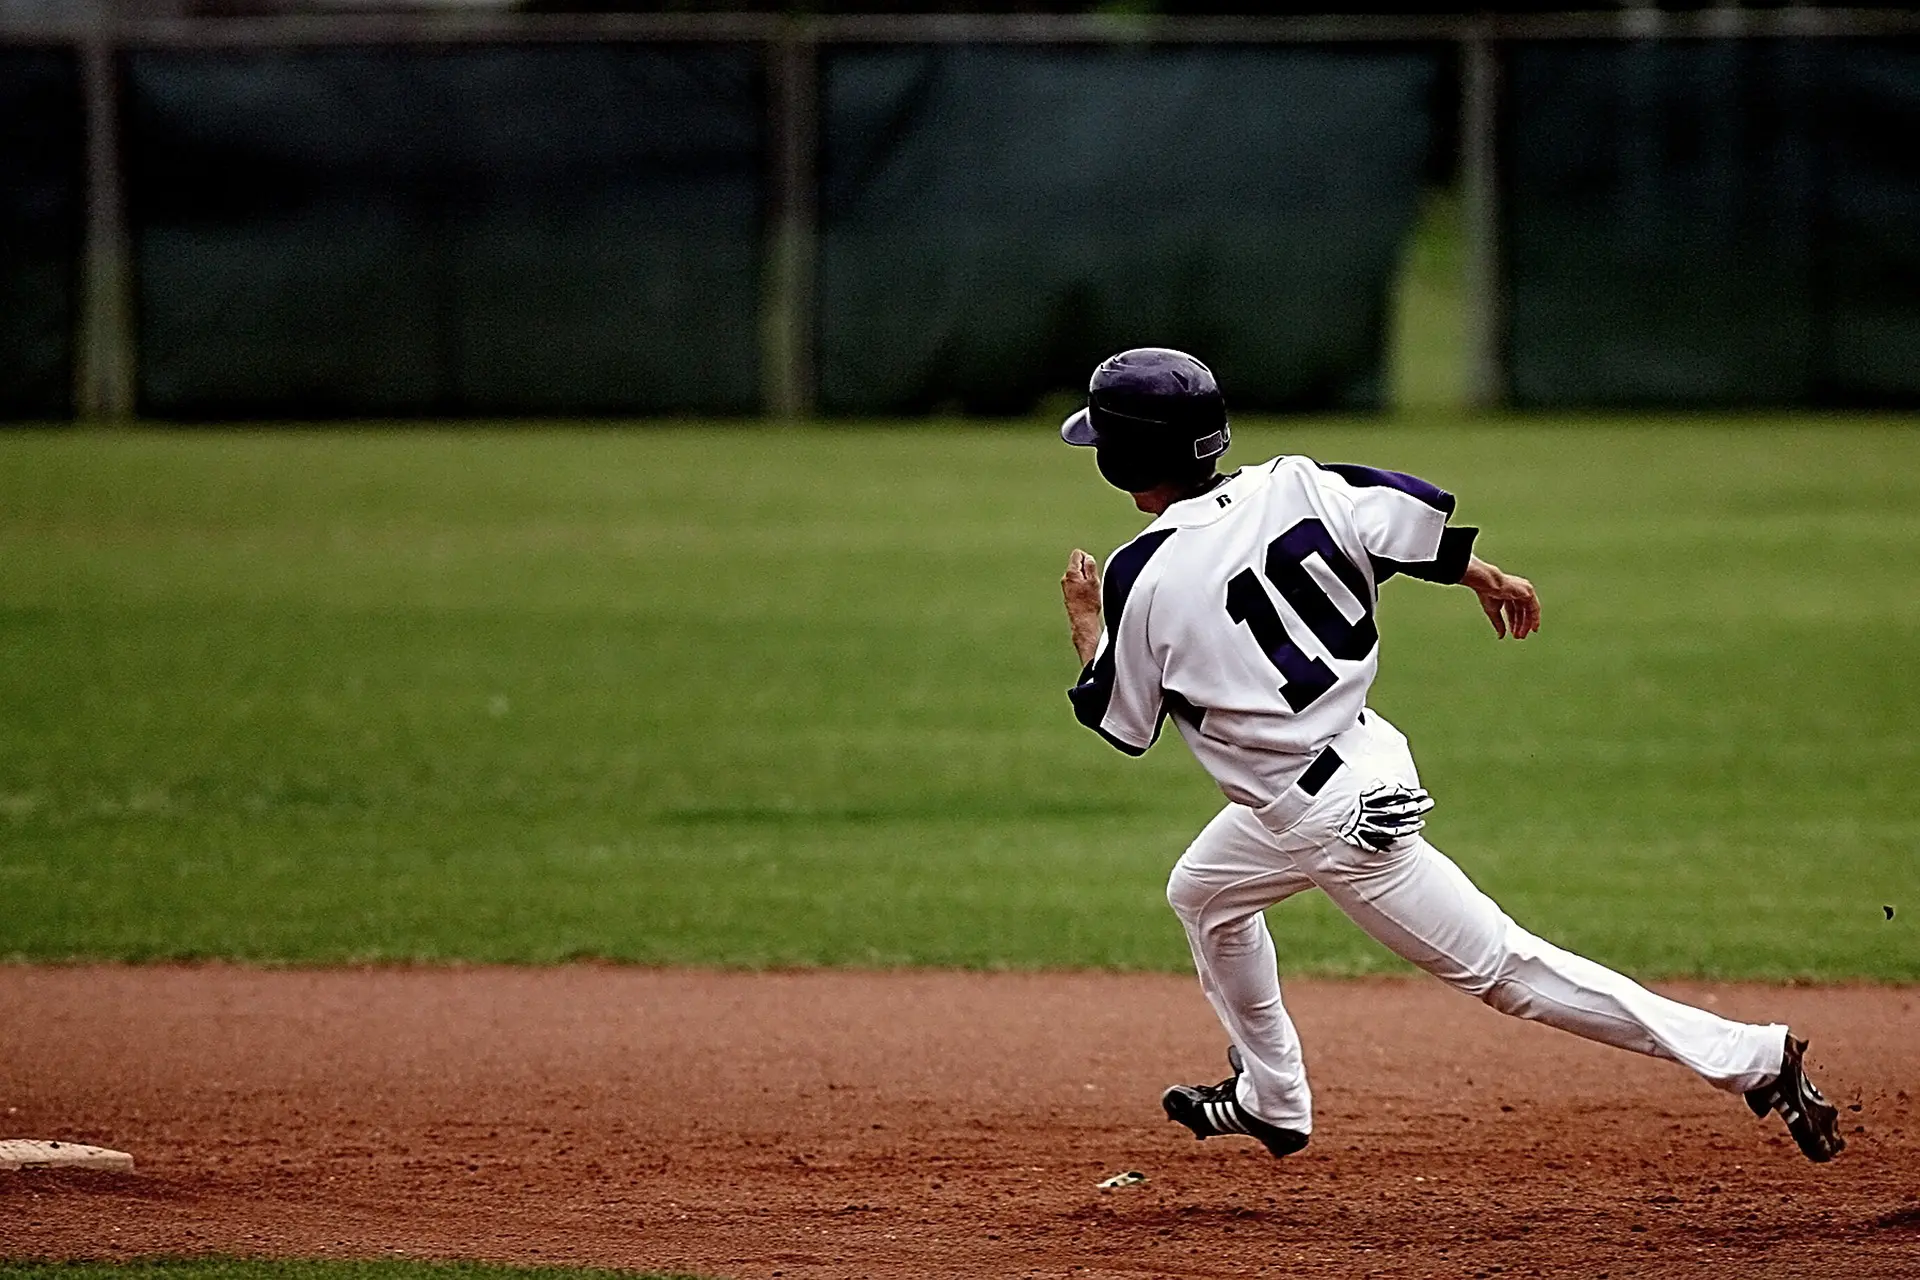 Baseball player running to base